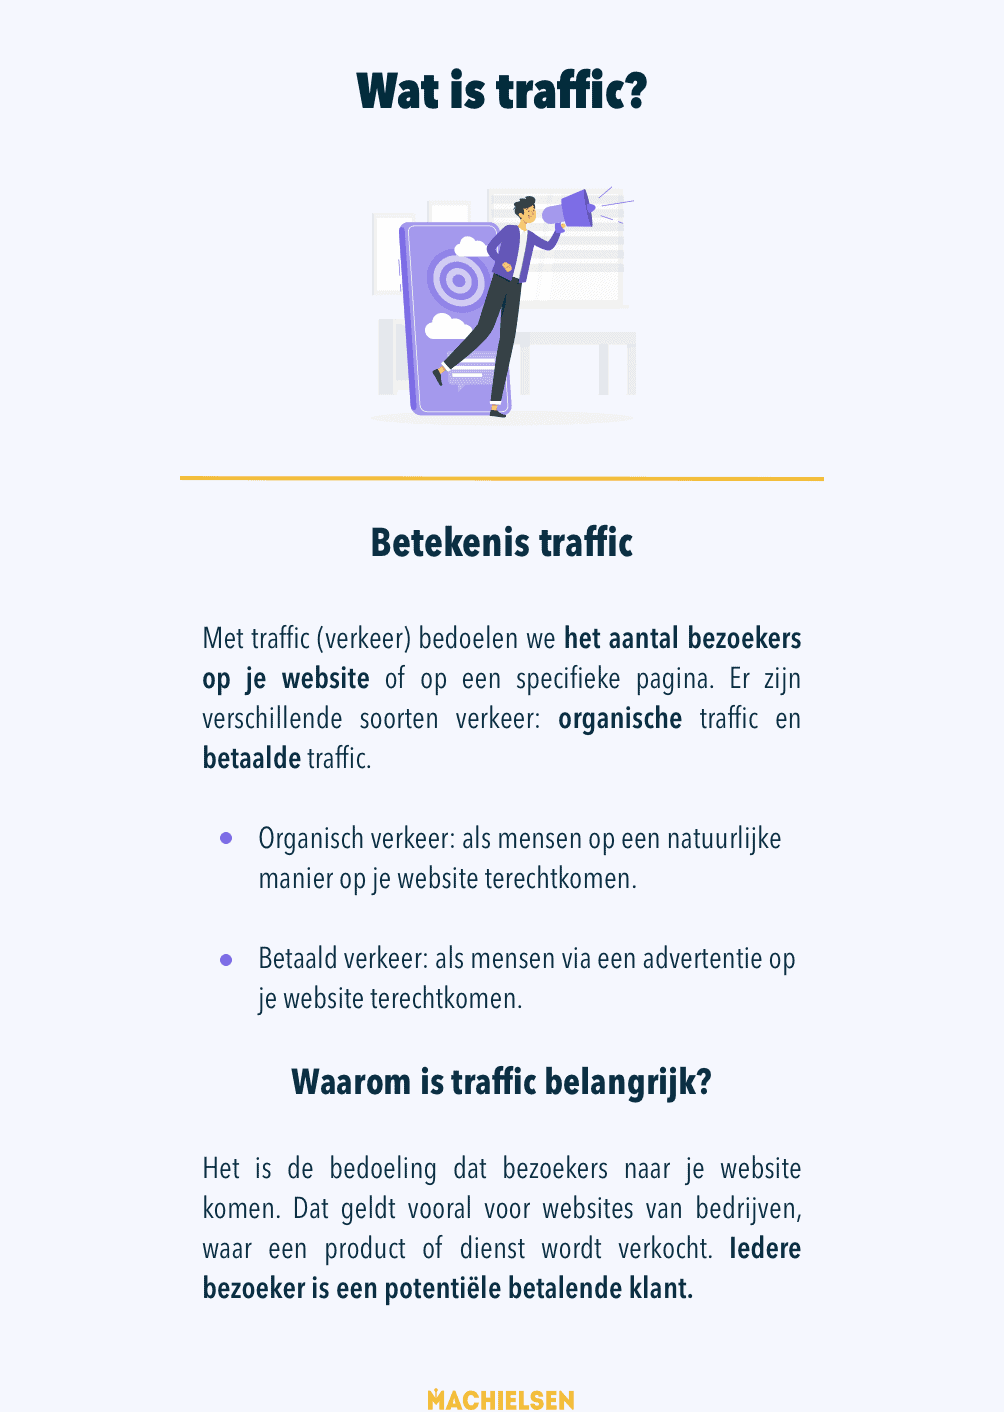 traffic-betekenis-infographic